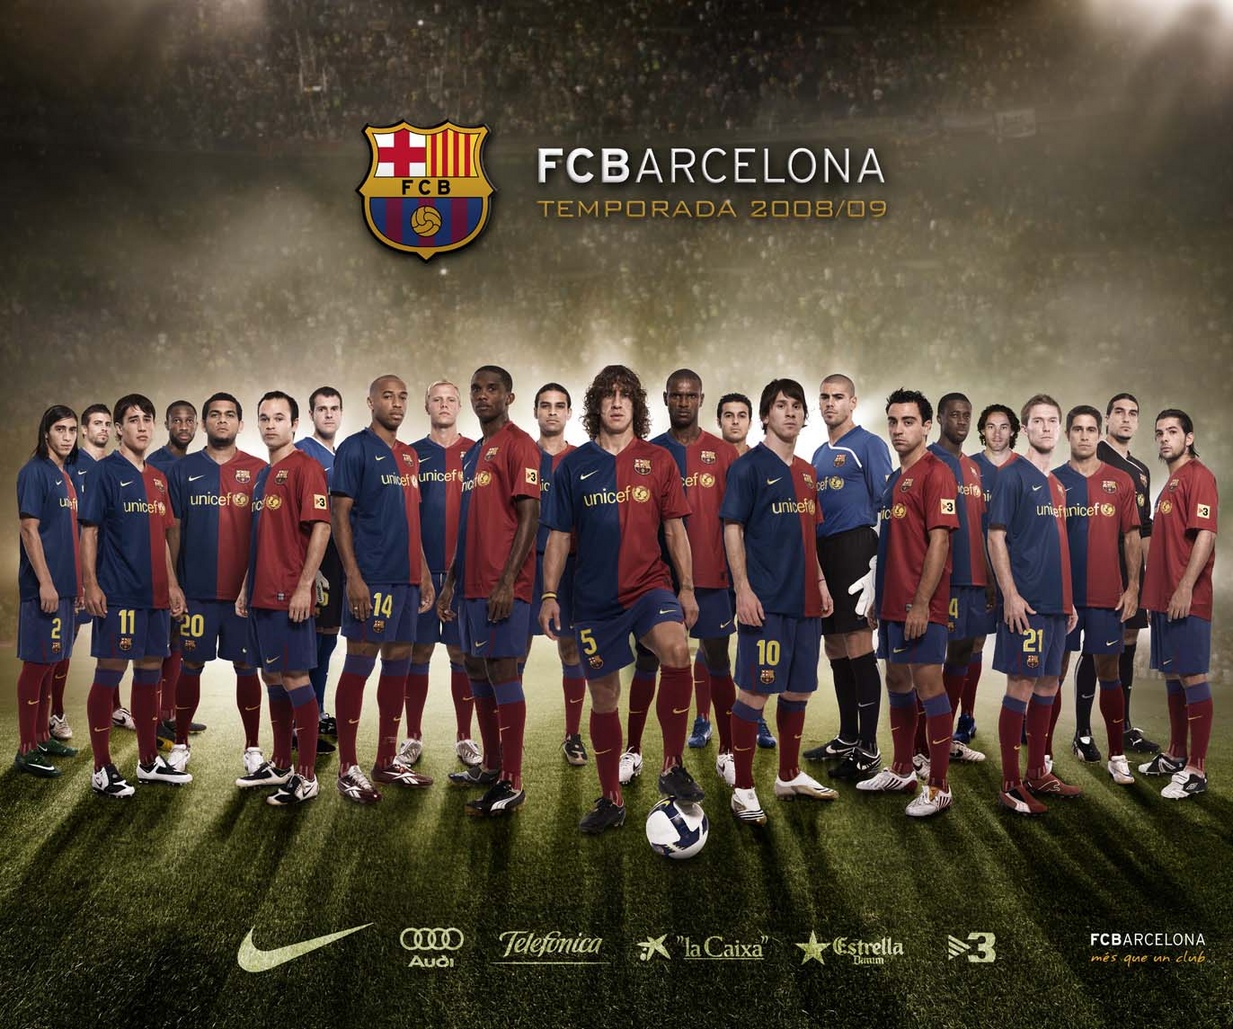 football soccer wallpaper barcelona team squad 01 800x600jpg 1233x1029